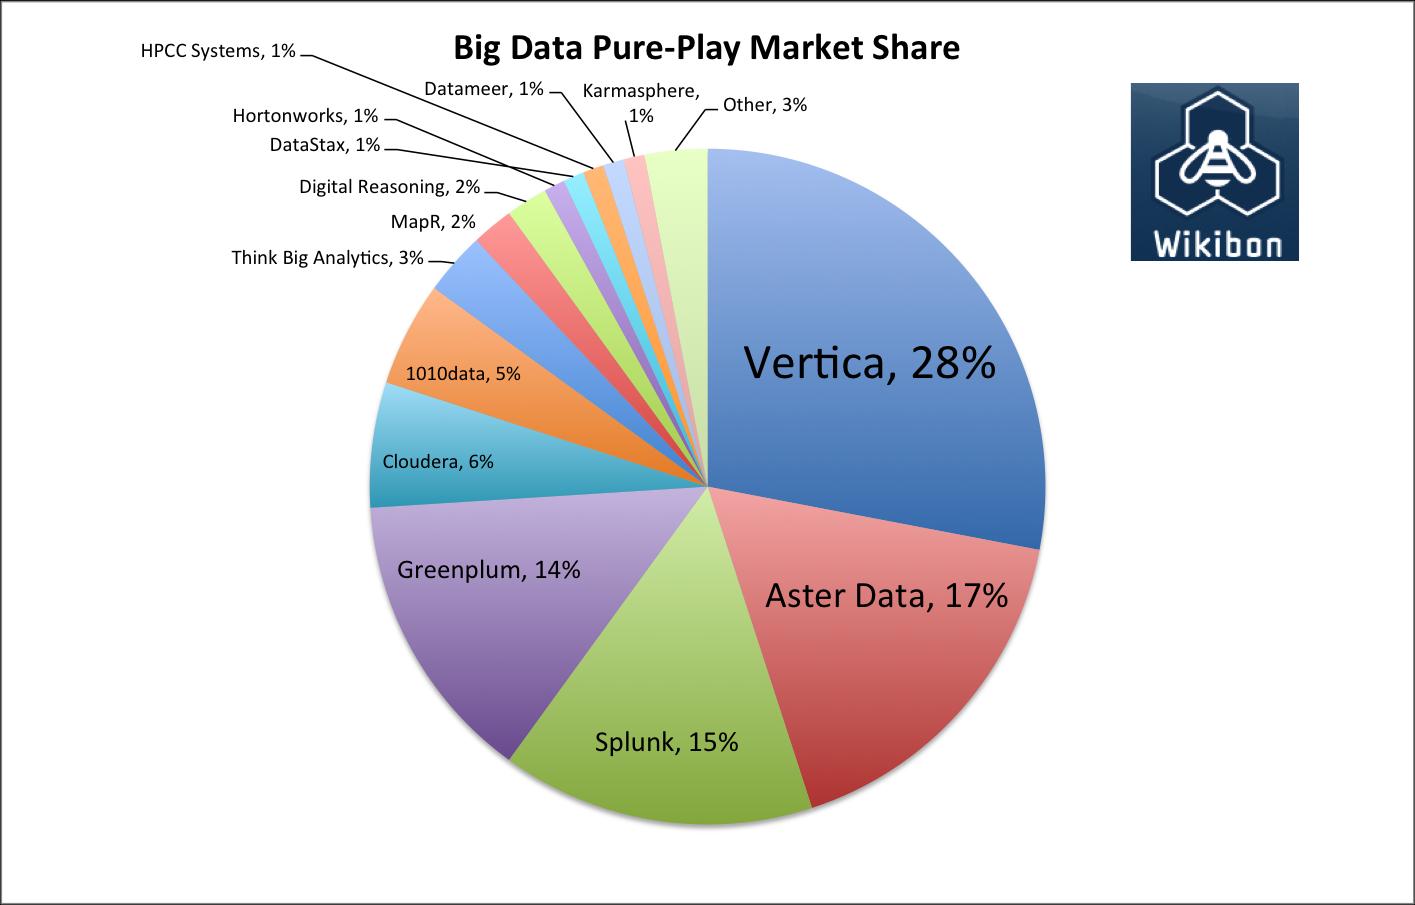 Vertica - #1 Big Data Player 2012 Source : Wikibon.